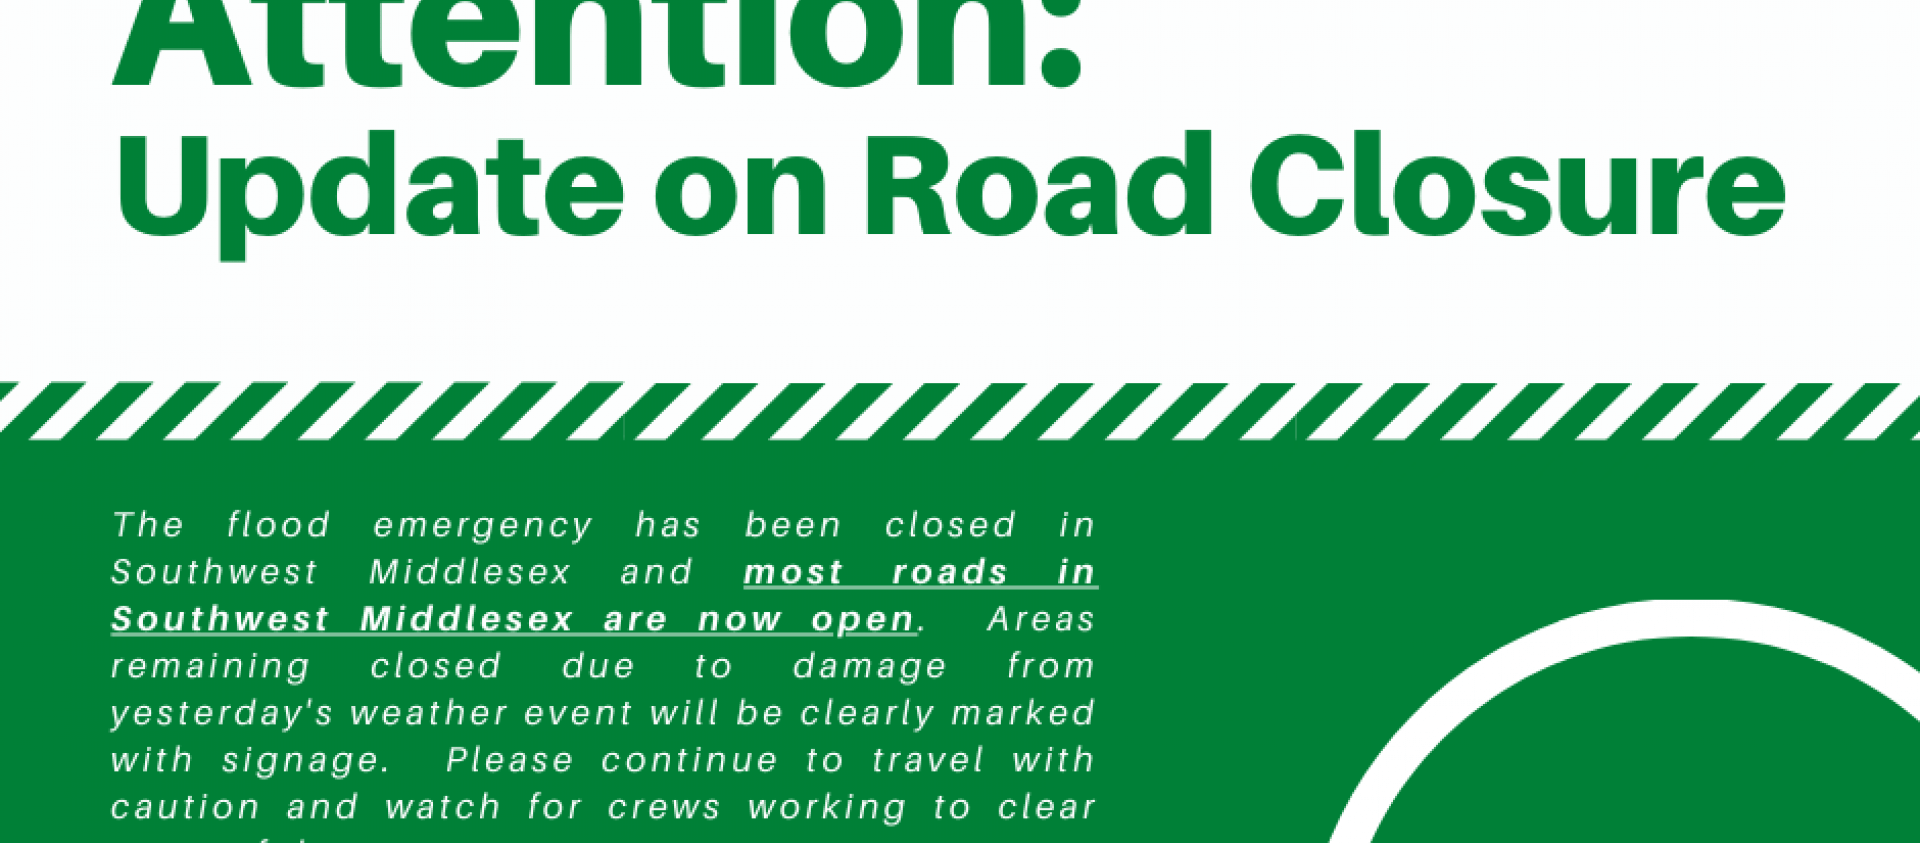 Update on Road Closure Image